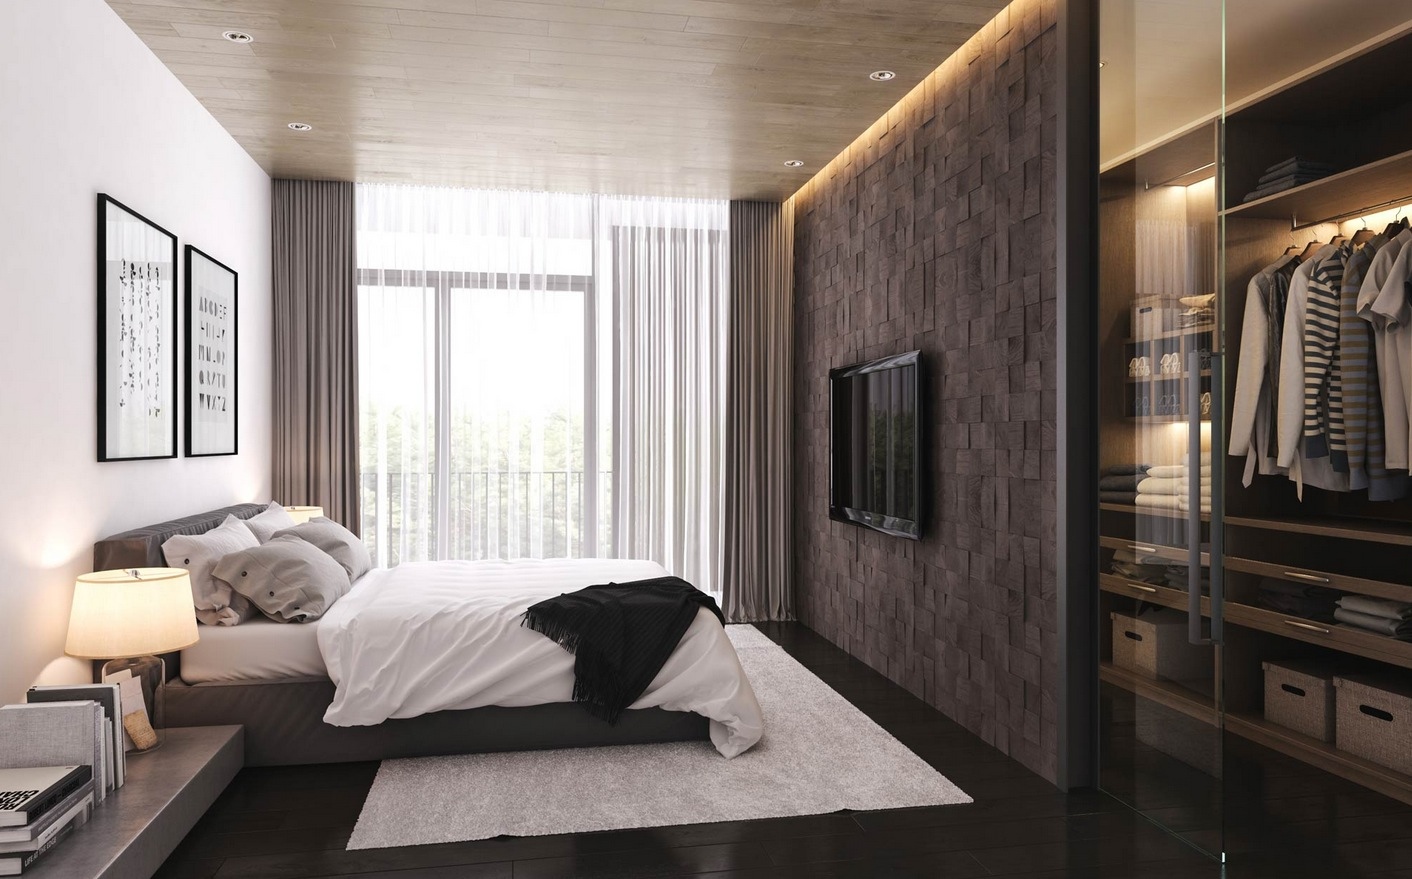 Design bedroom 21 cool bedrooms for clean and simple design inspiration KWDTJMB